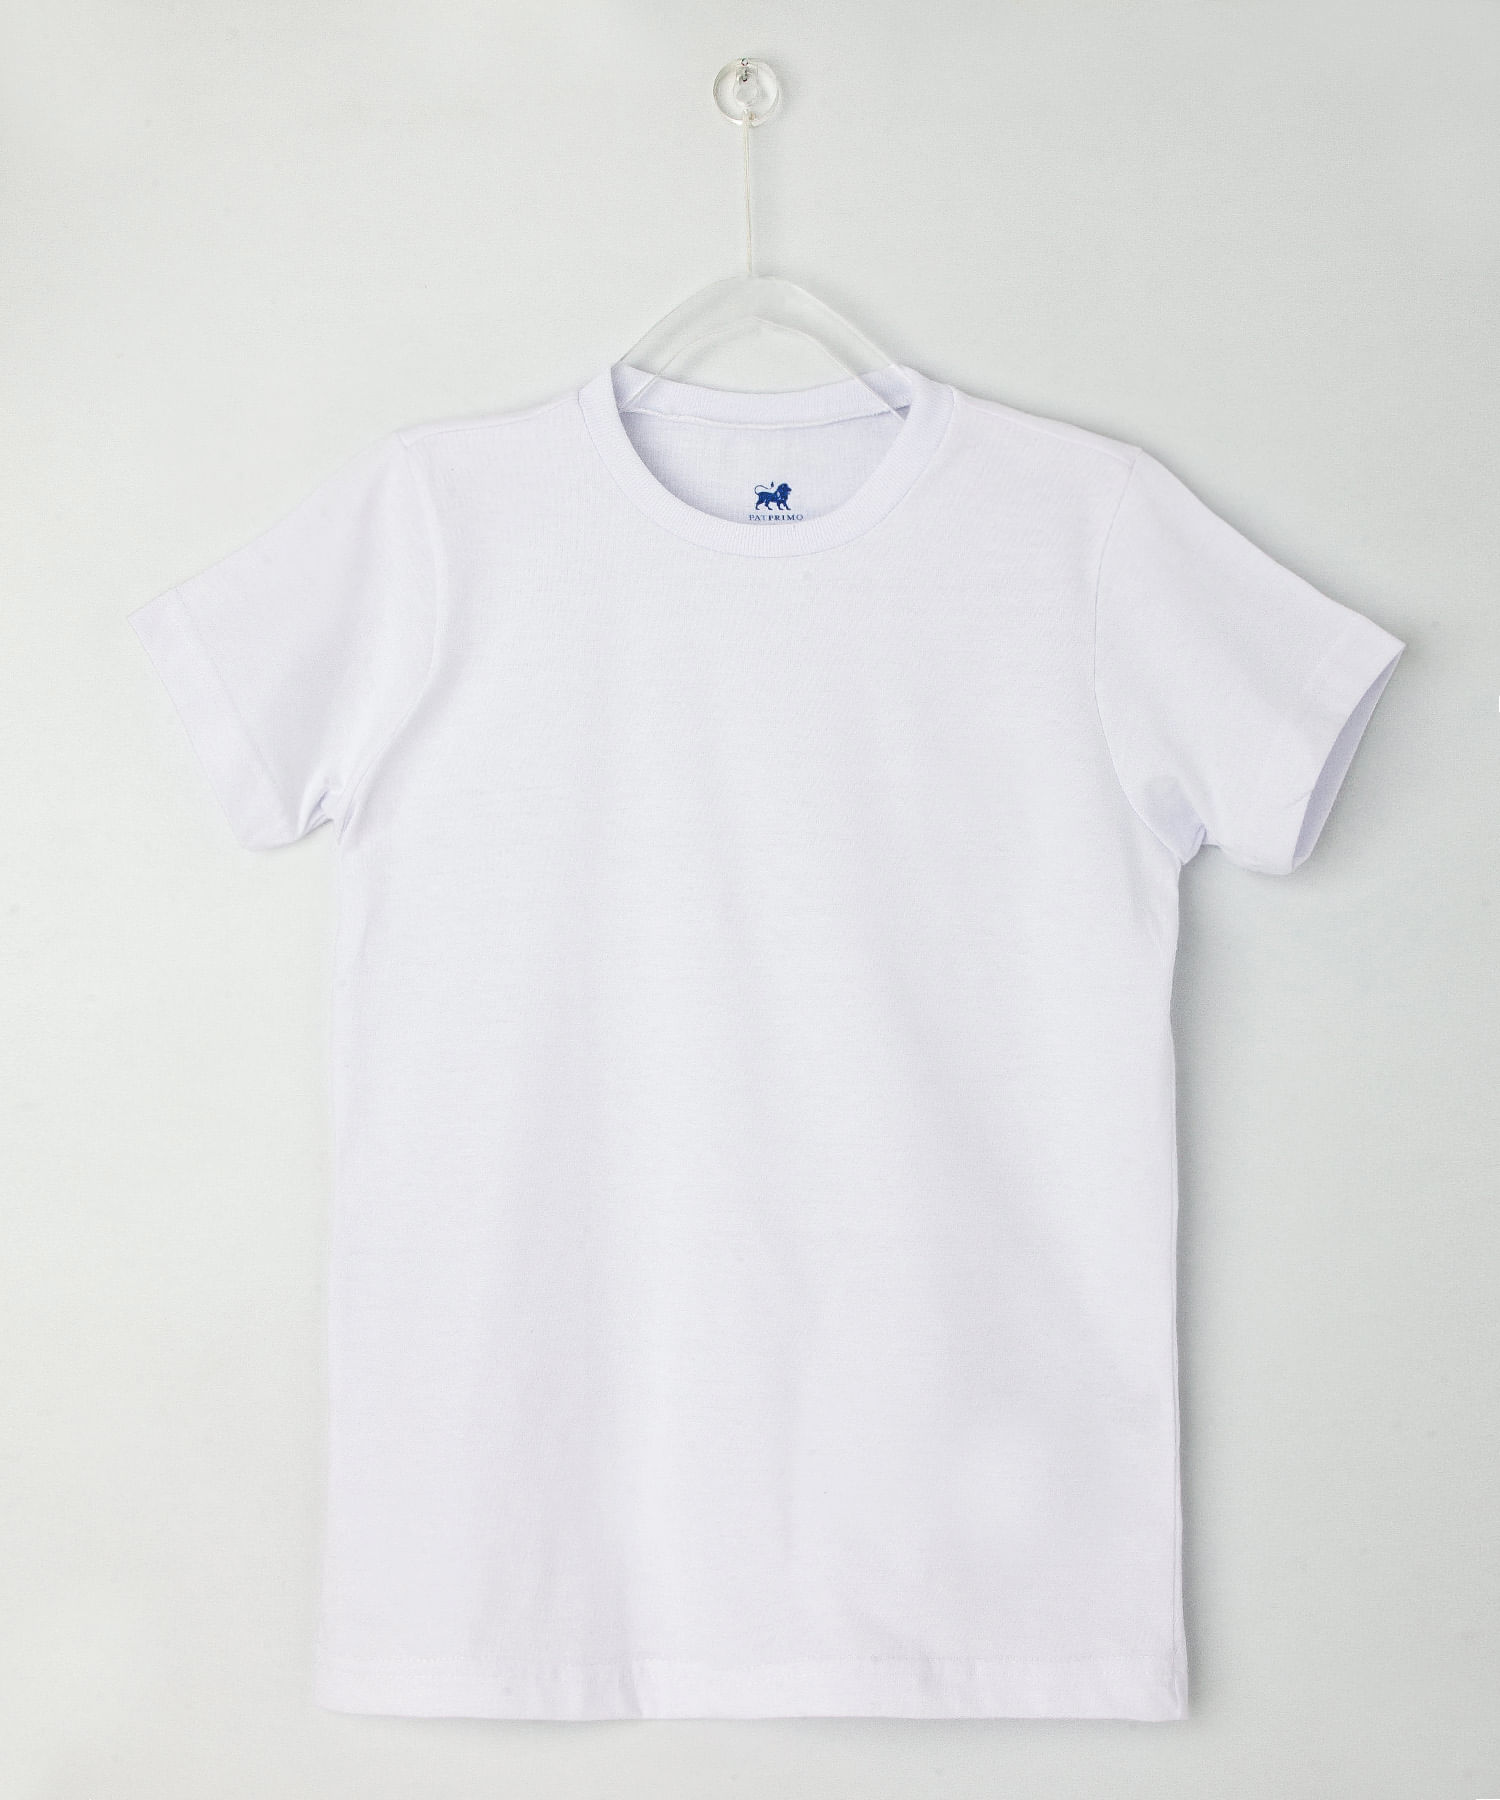 Camiseta interior para niño blanca de manga corta